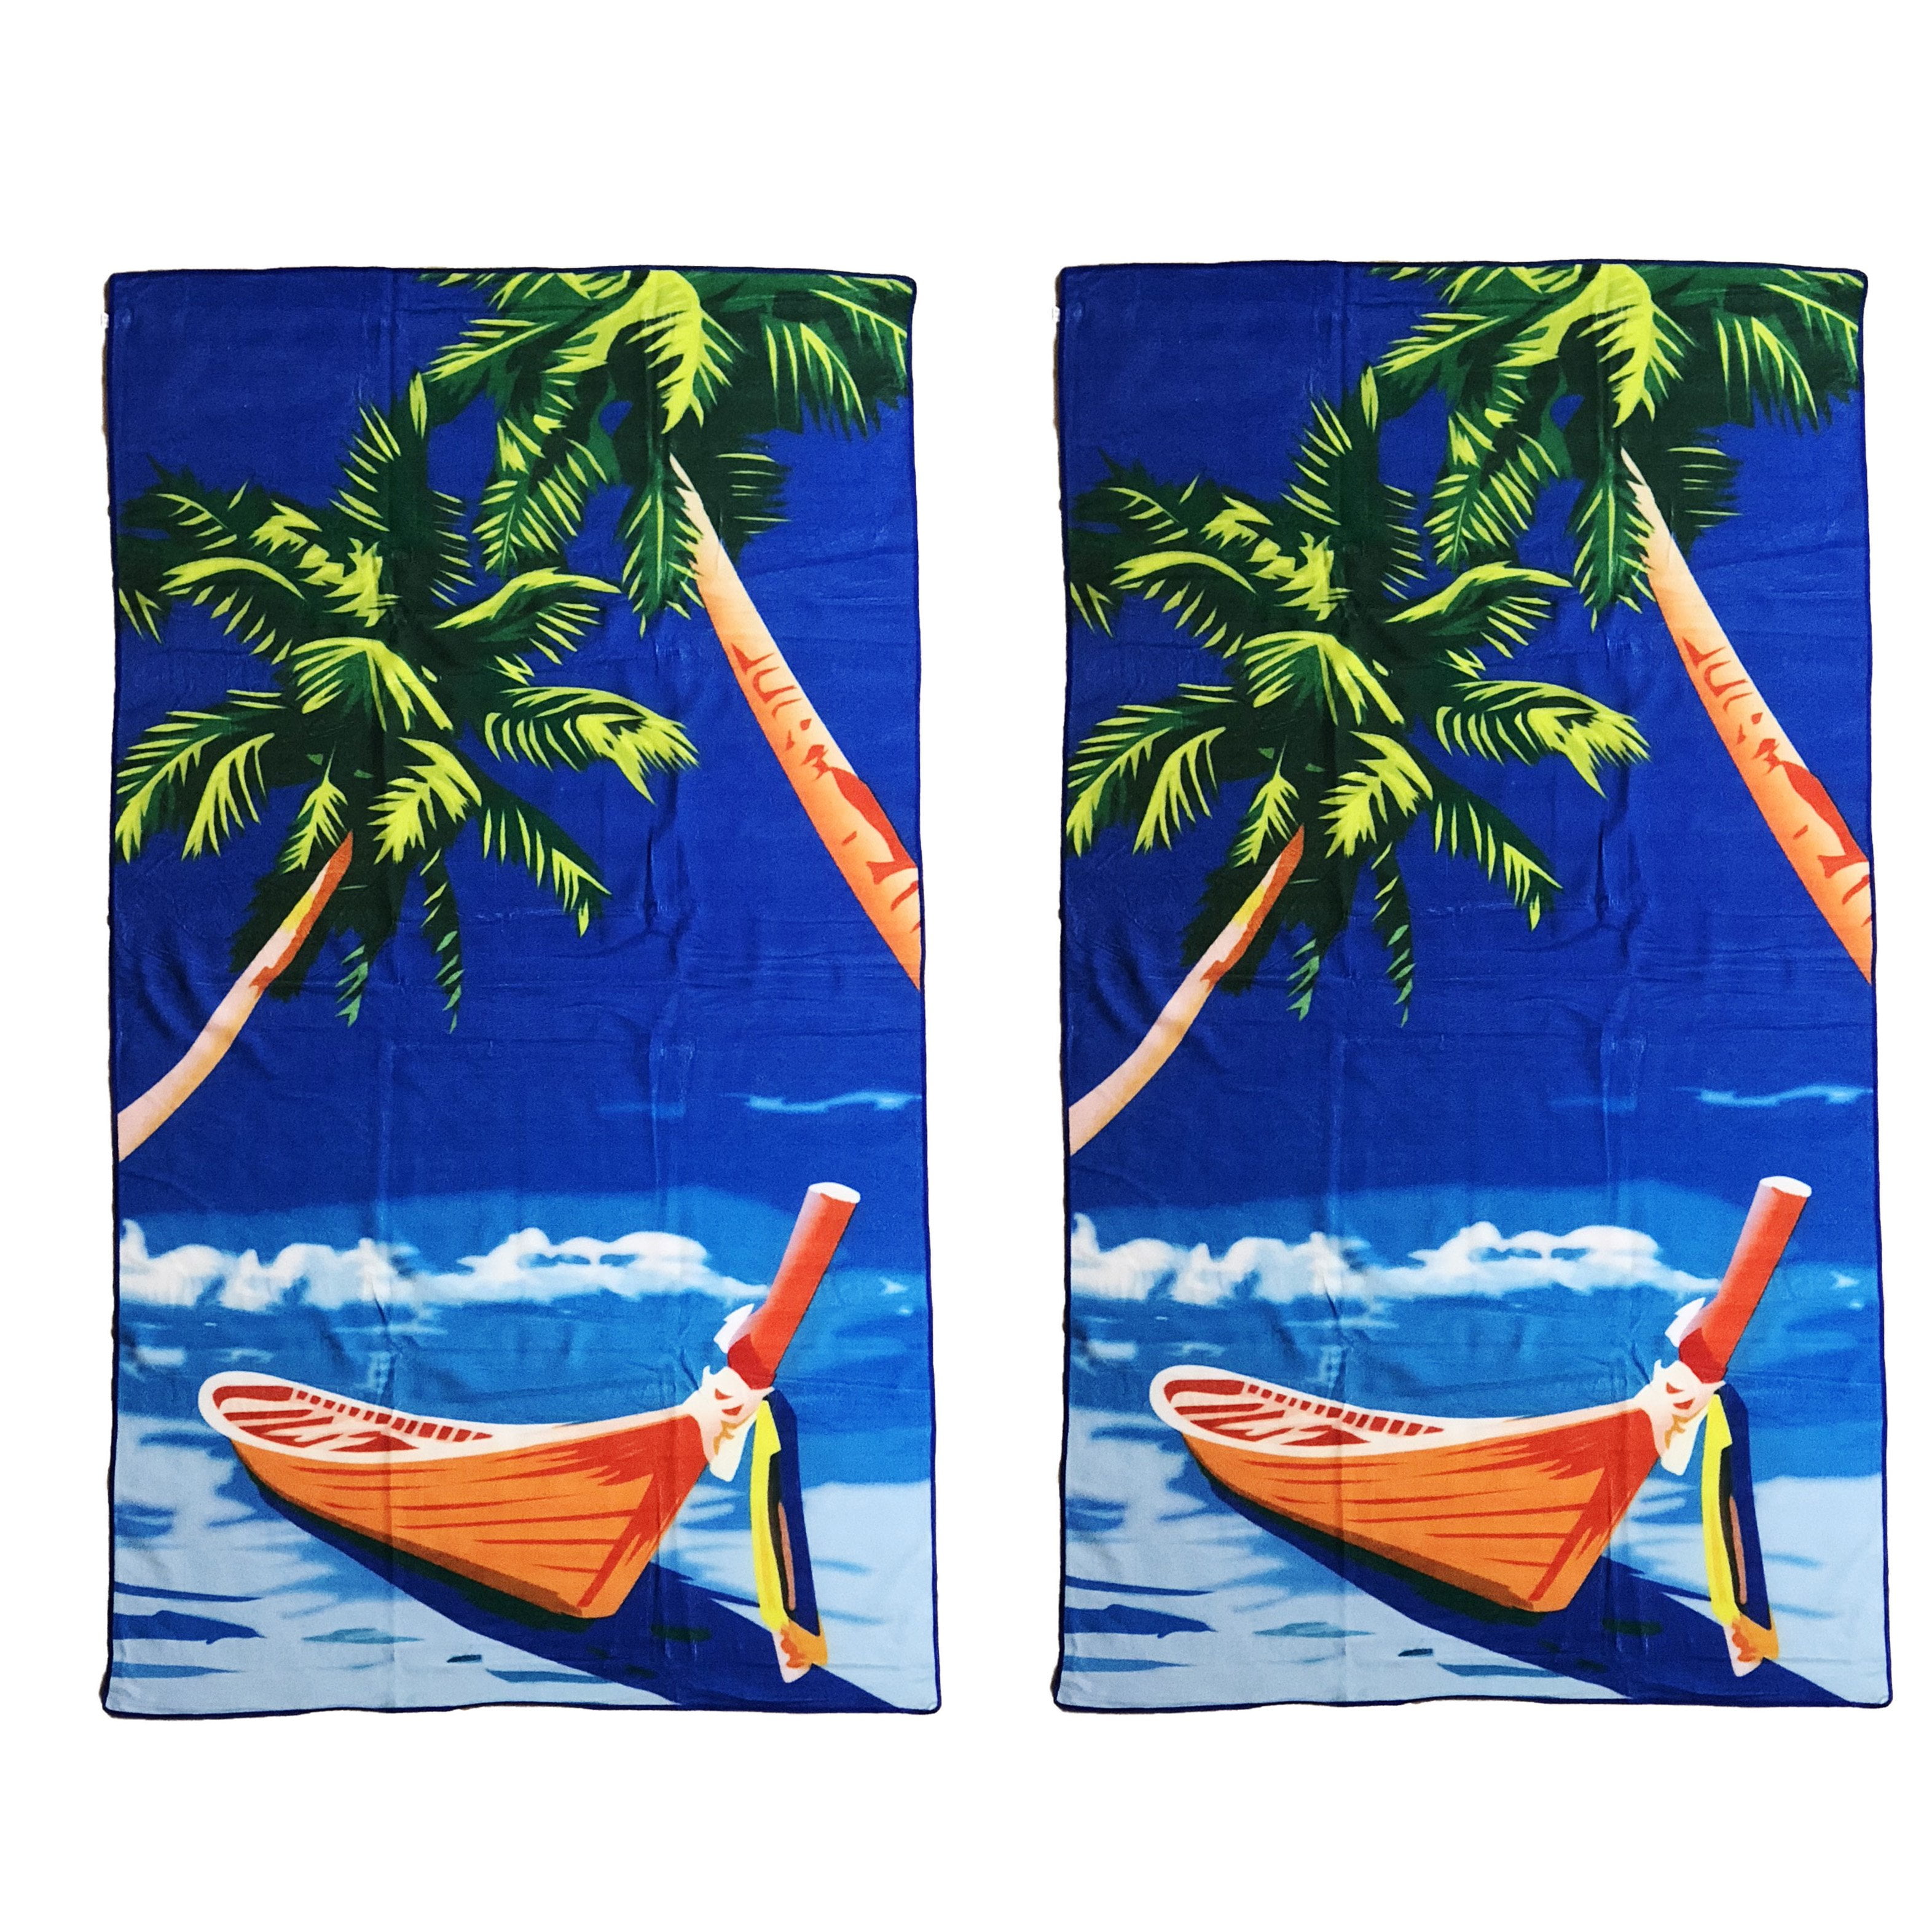 Oversize 40"x70" Microfiber Beach Towel Sandals-BT81106 Home Kitchen 